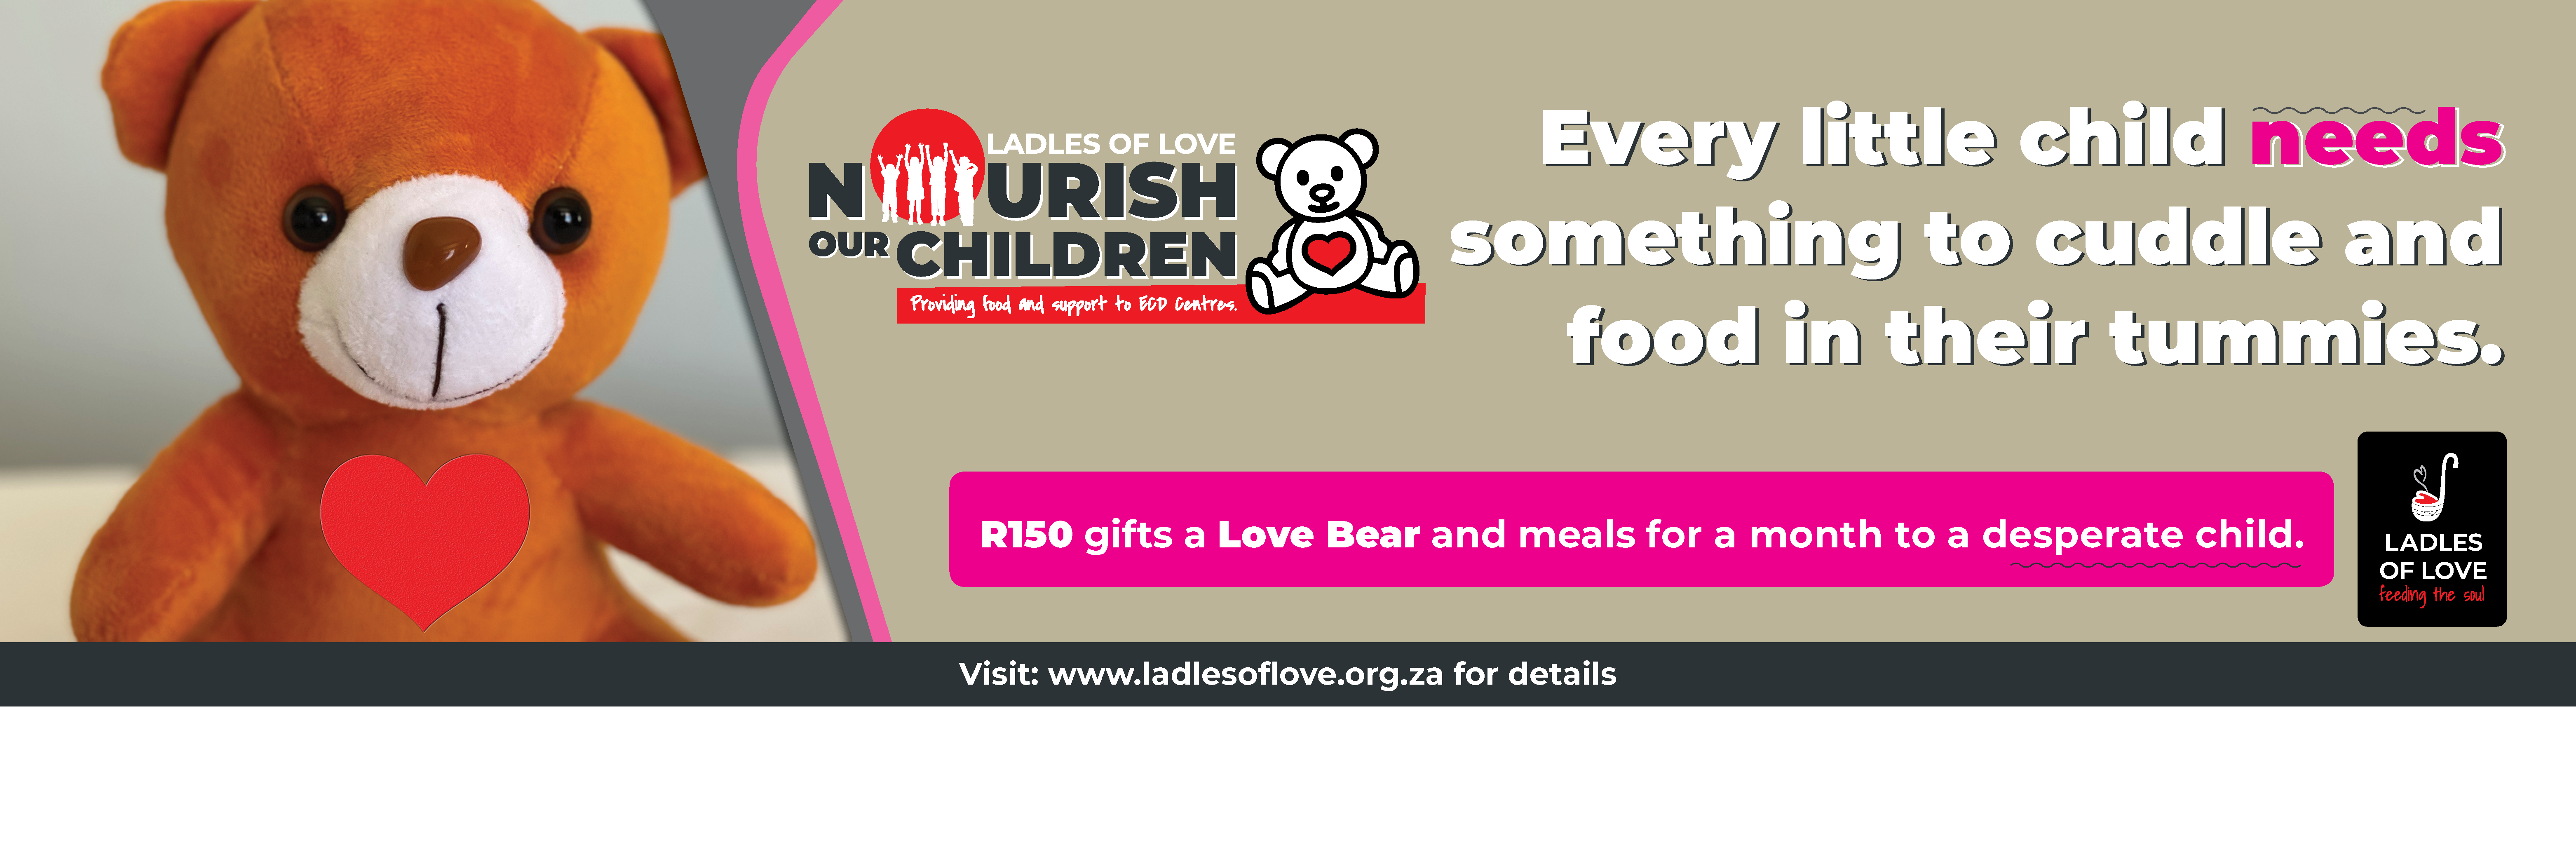 Love Bear Campaign